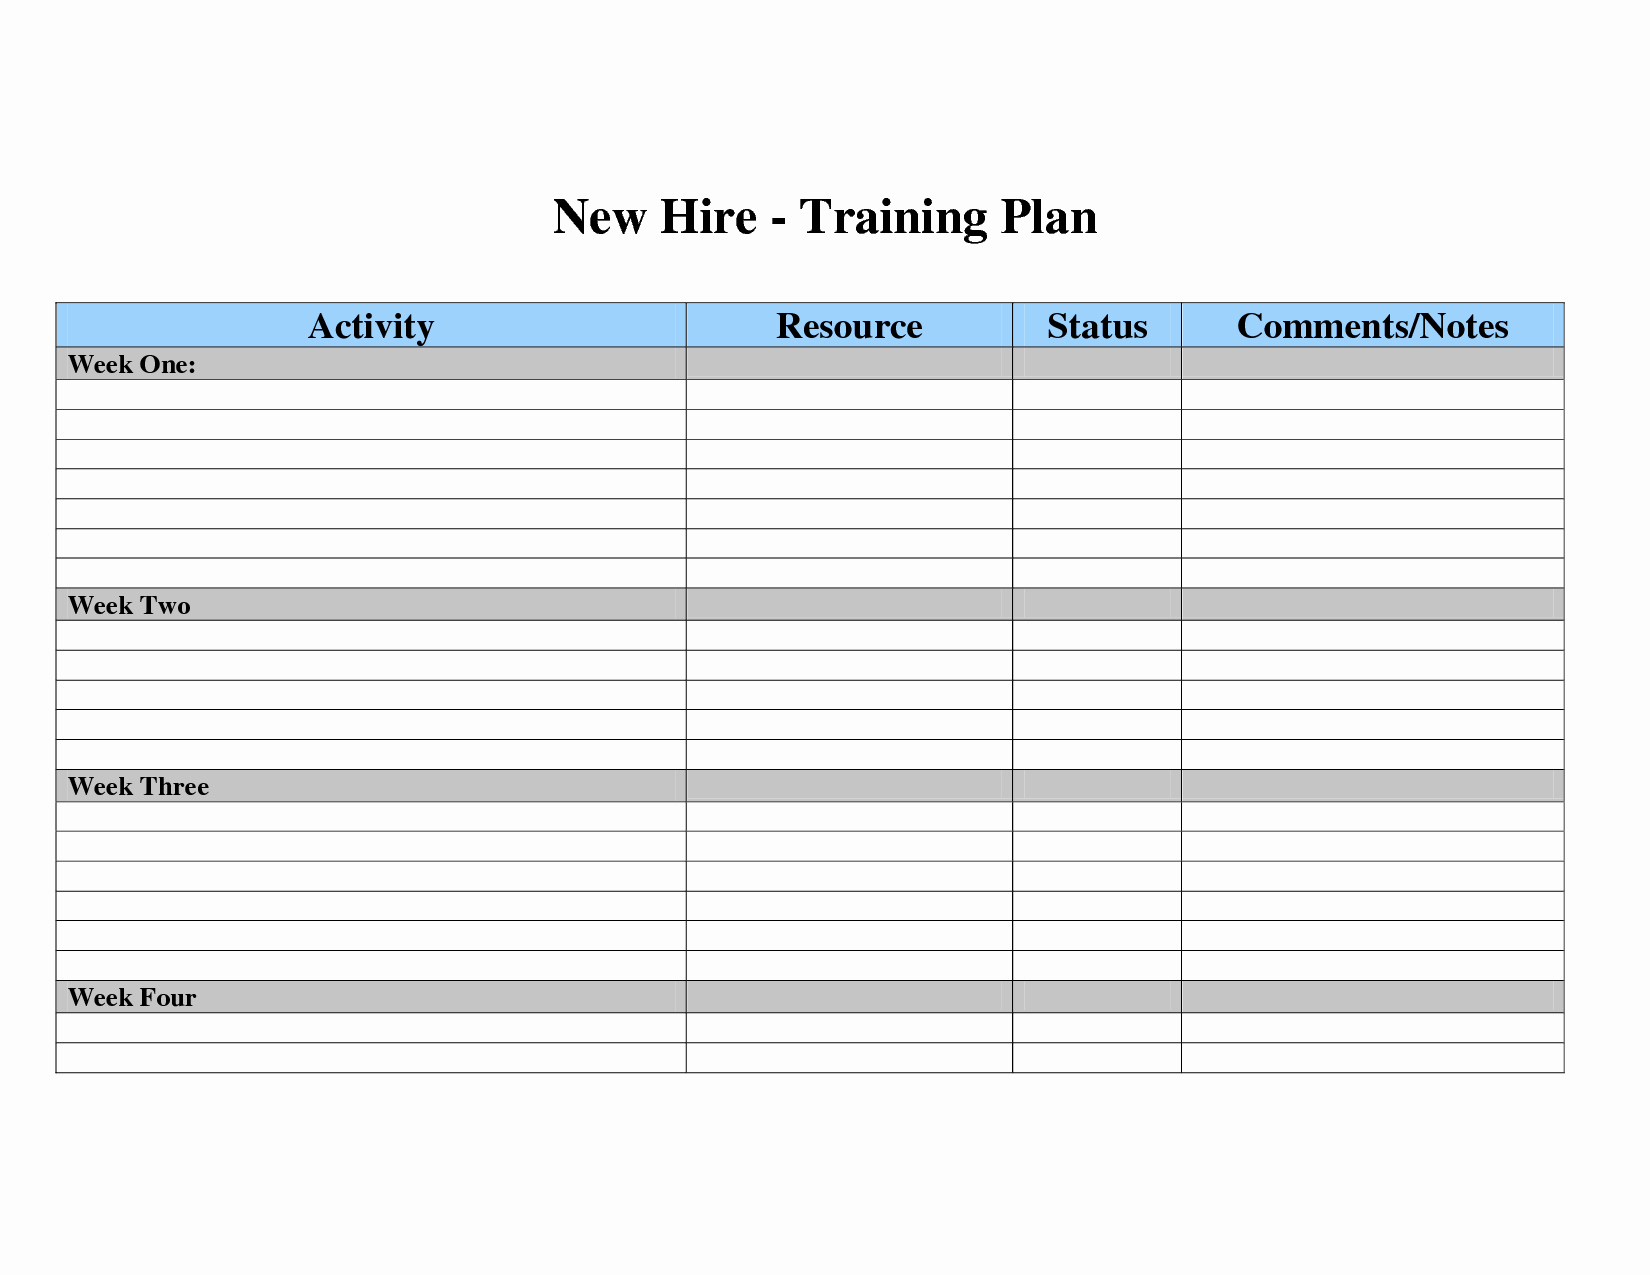 Employee Training Schedule Template Unique Employee Training Plan Template